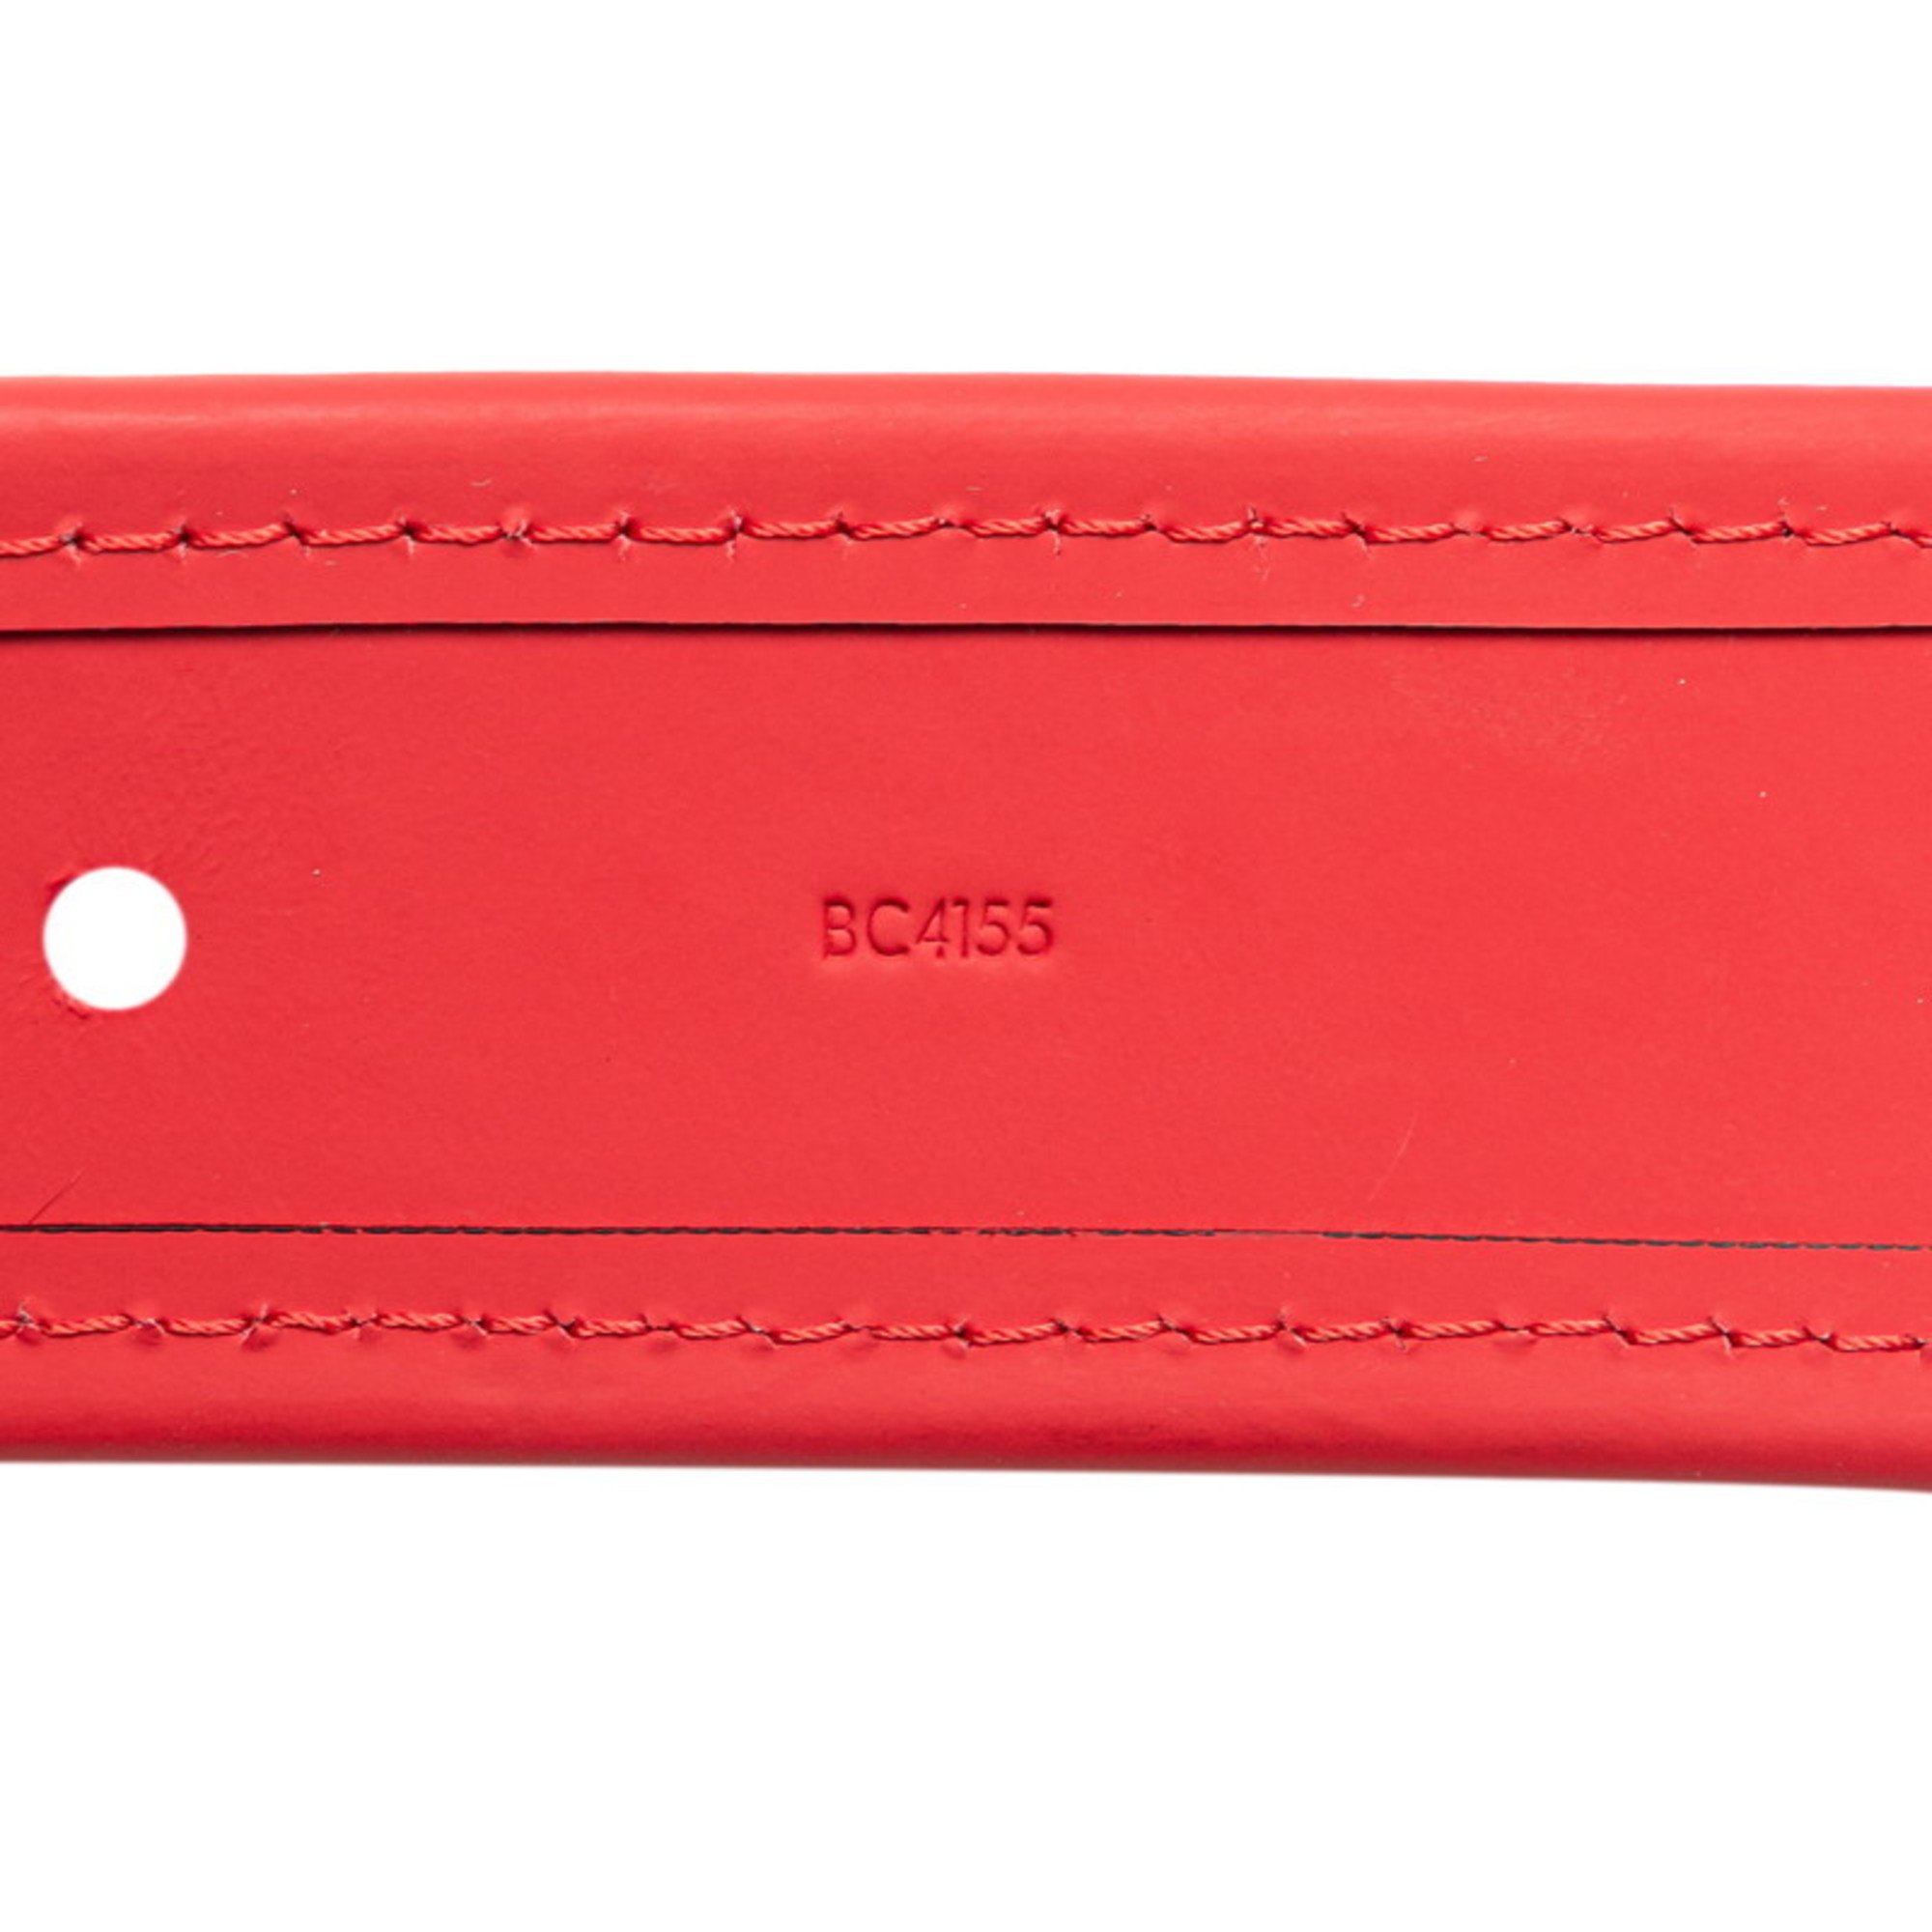 Louis Vuitton Damier Infinie Santur Stamp Belt 90/36 M9122 Red Rubber Women's LOUIS VUITTON